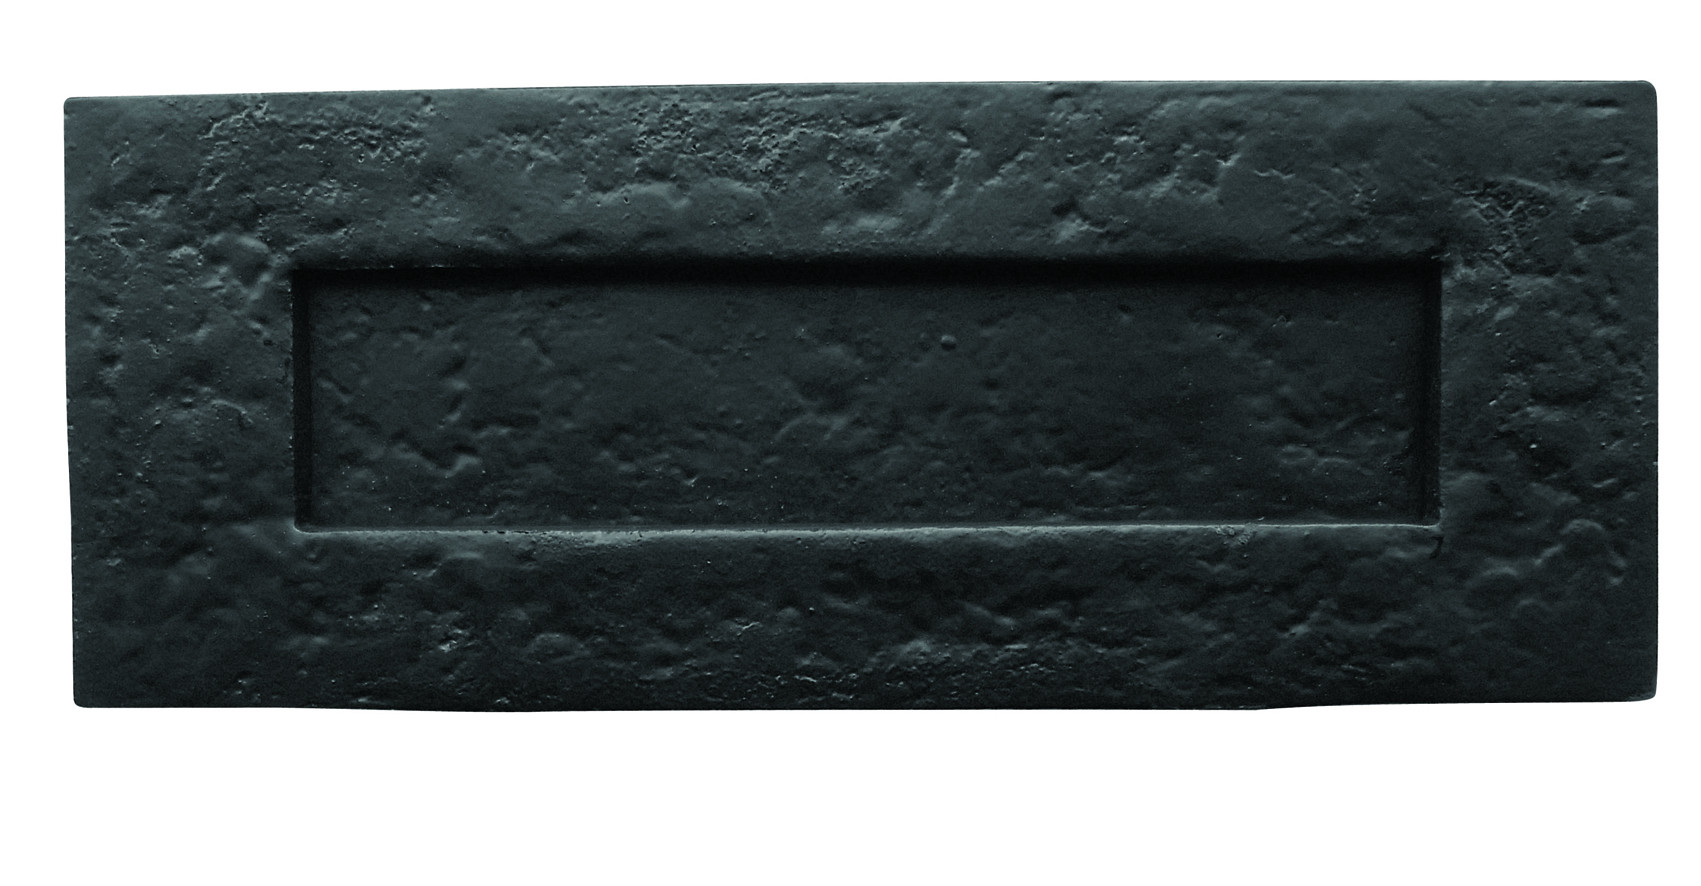 JAB12 - Traditional Plain Letterplate 270mm x 115mm - Black Antique